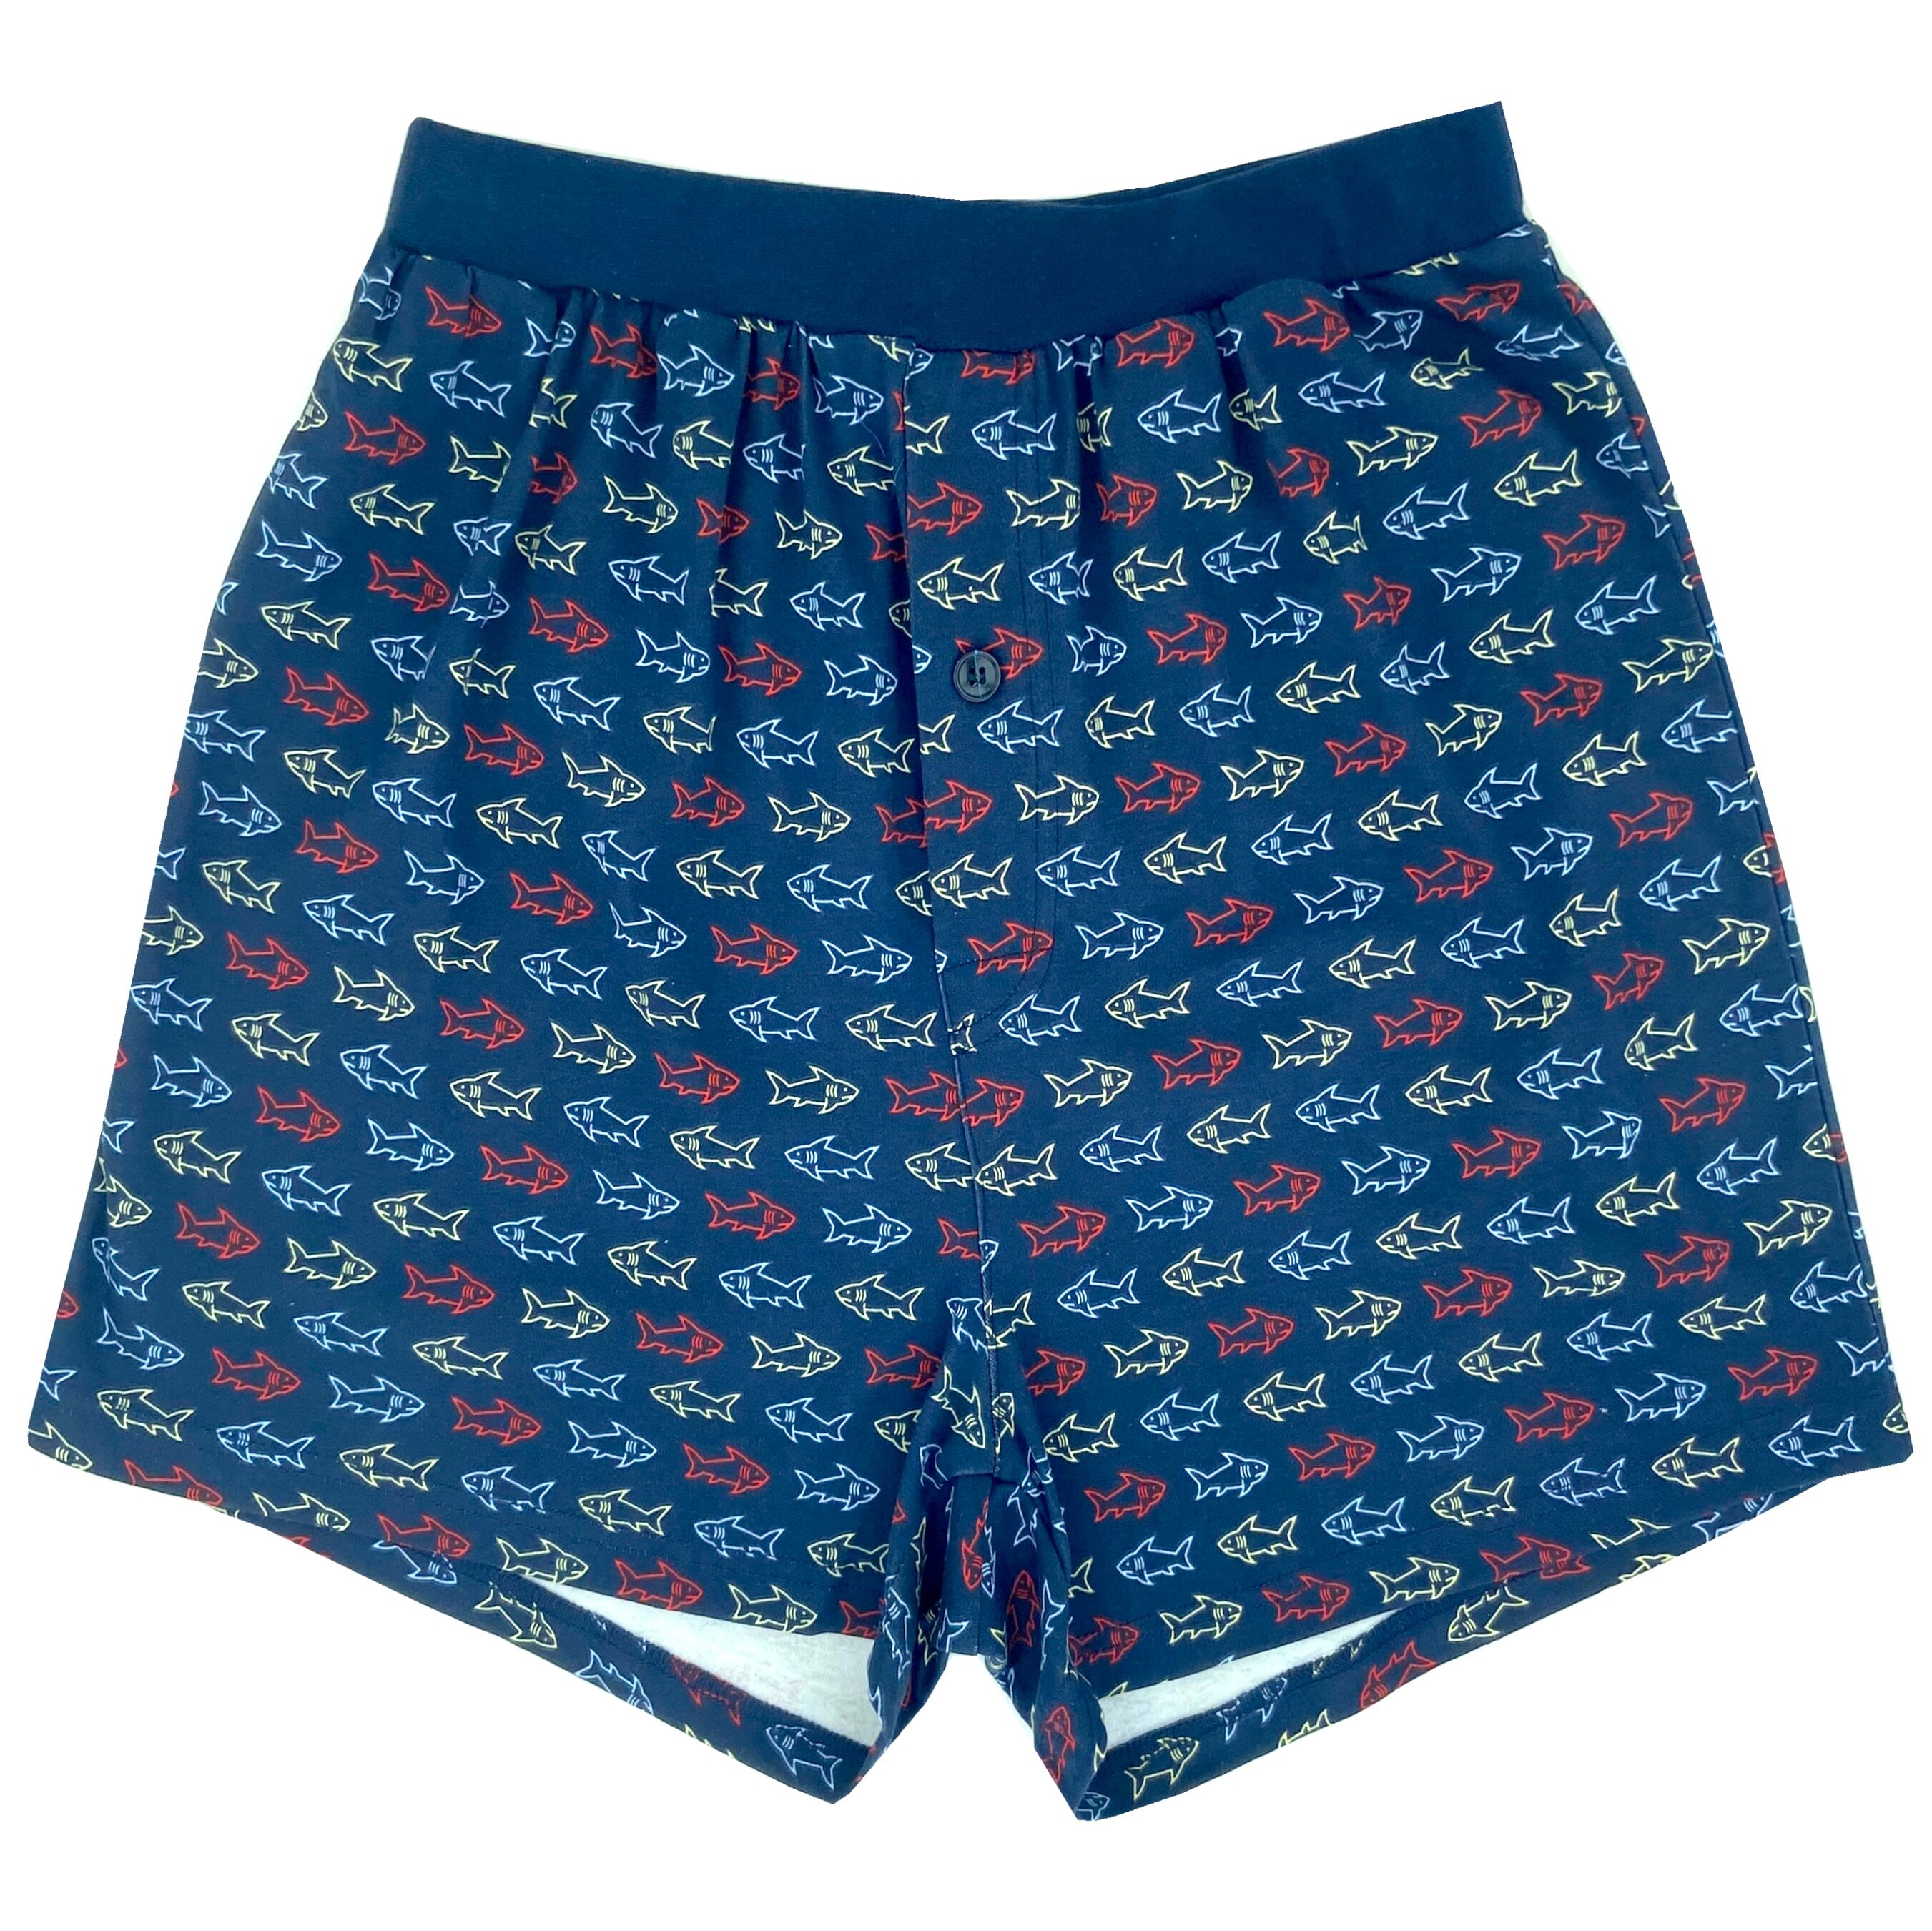 Men's Navy Blue Fish All-Over Print Cotton Knit Pajama PJ Sleep Shorts